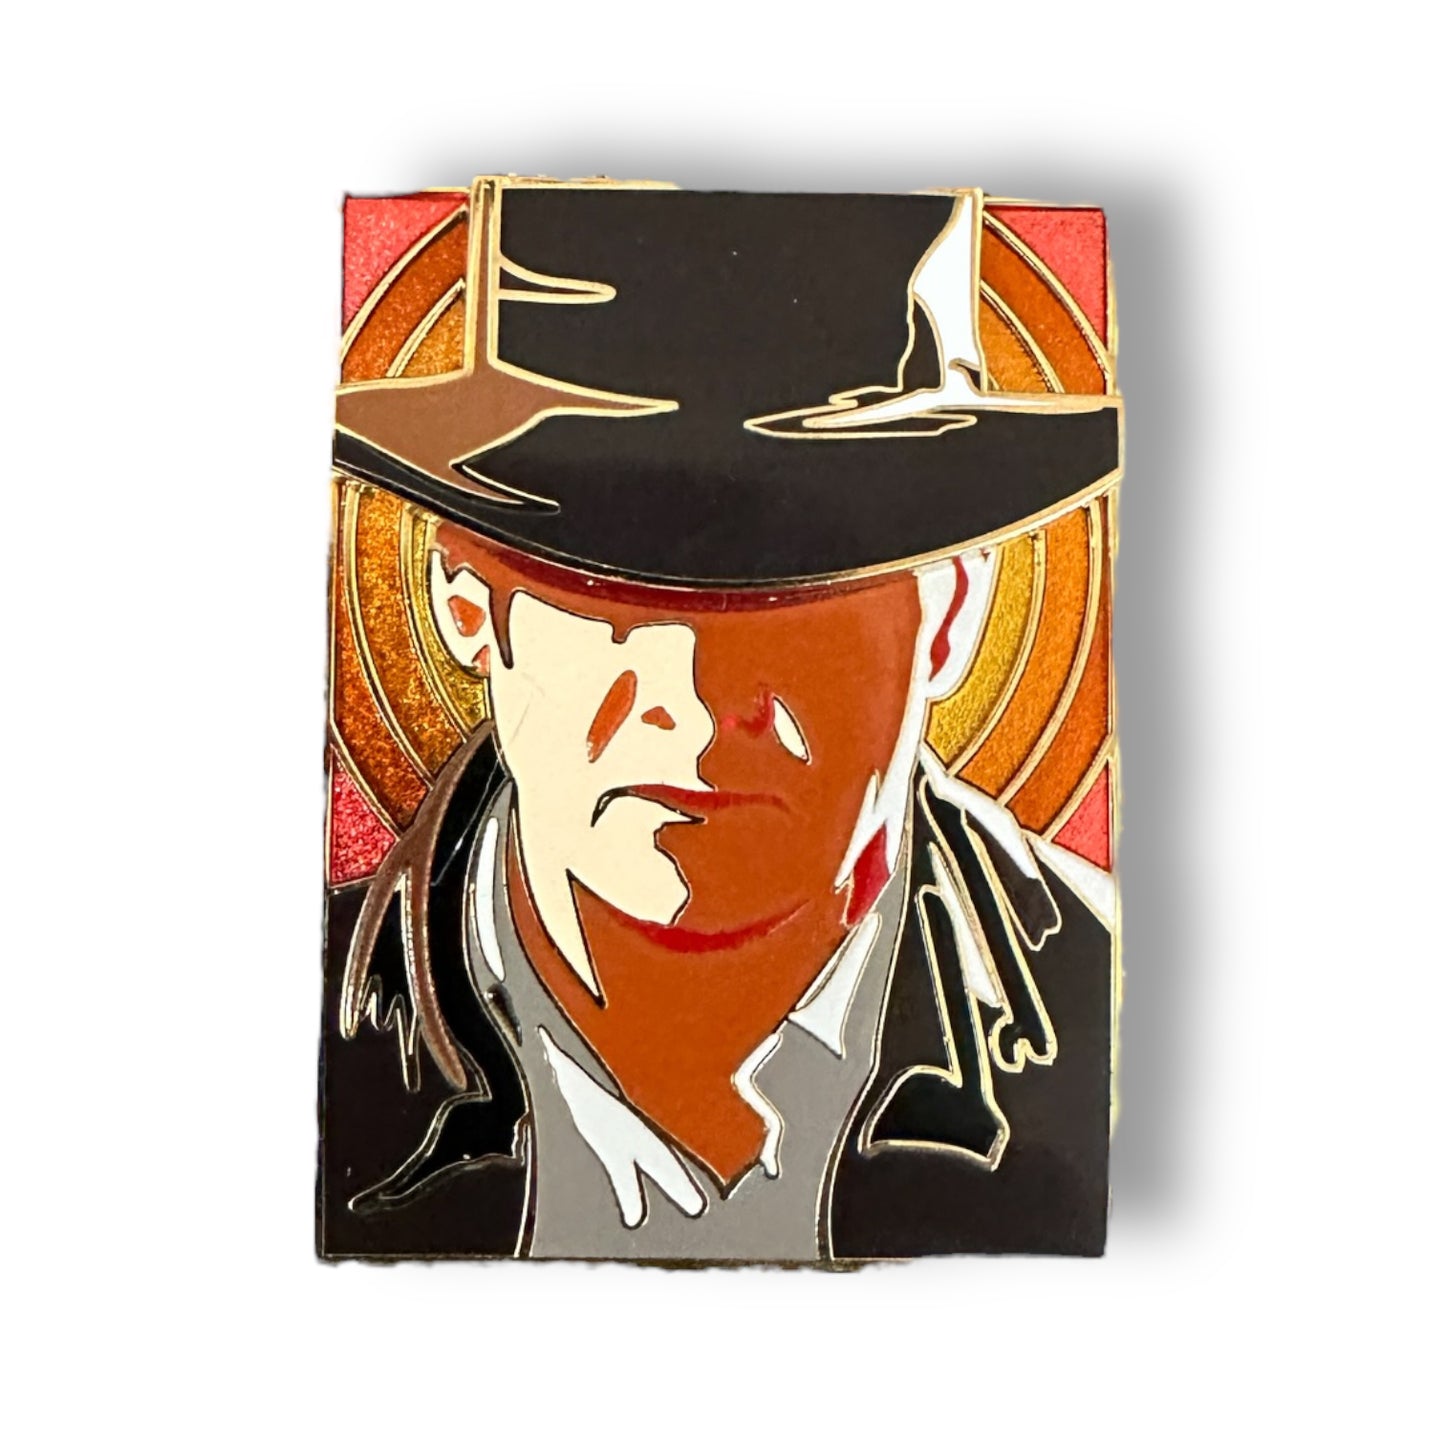 DSSH Indiana Jones Profile Pin